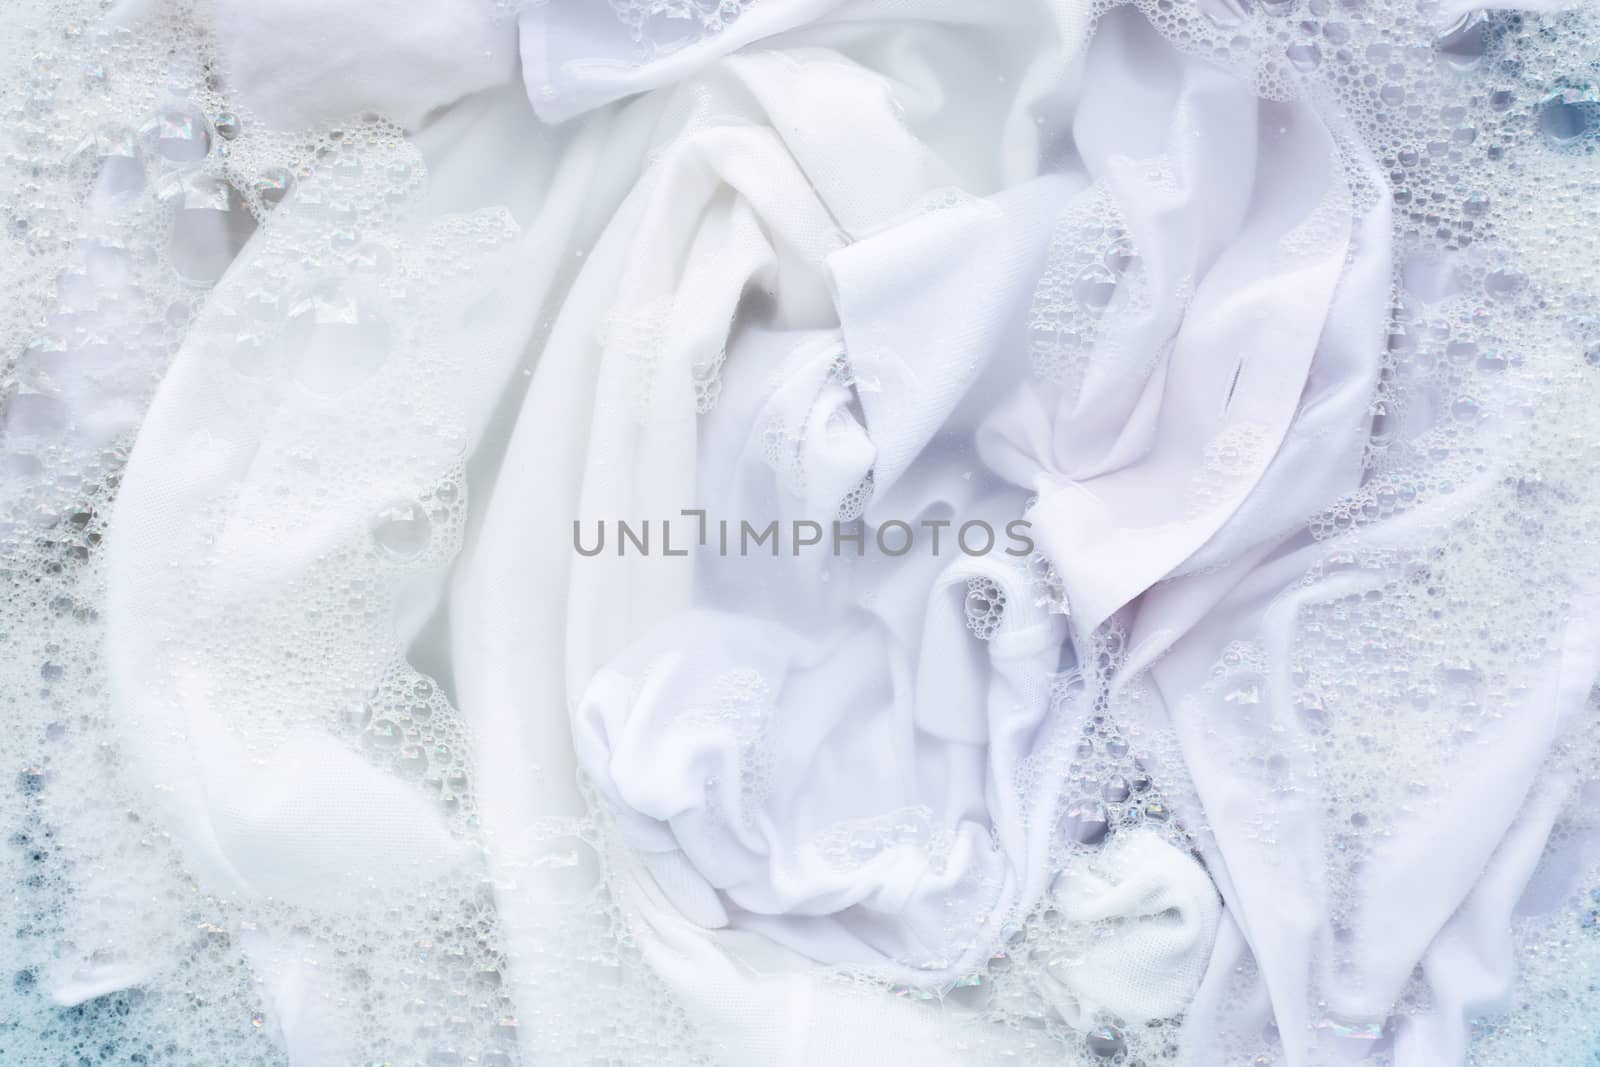 White shirt soak in powder detergent water dissolution. Laundry  by Bowonpat